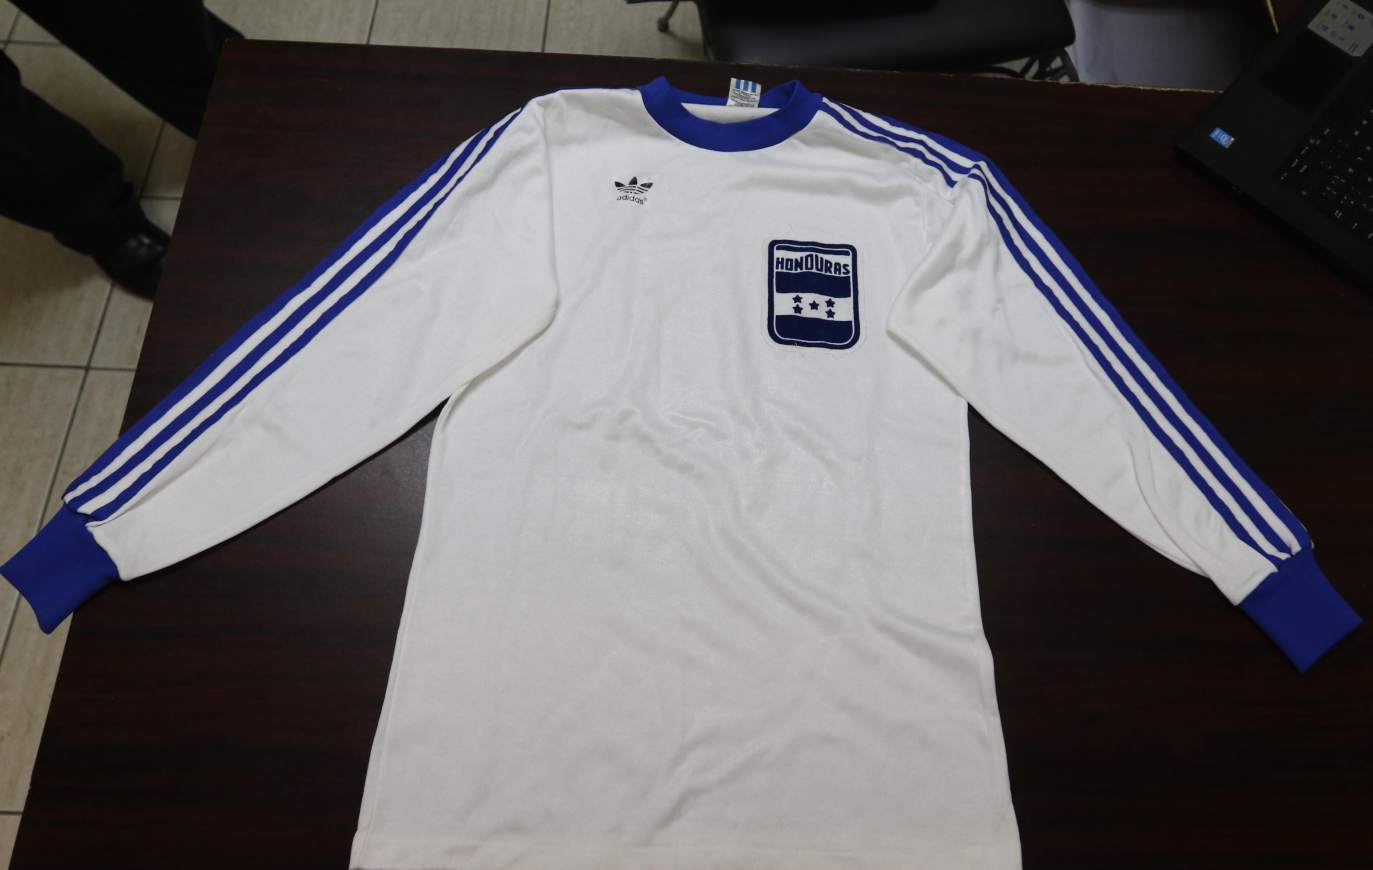 Old Honduras football shirts and soccer jerseys